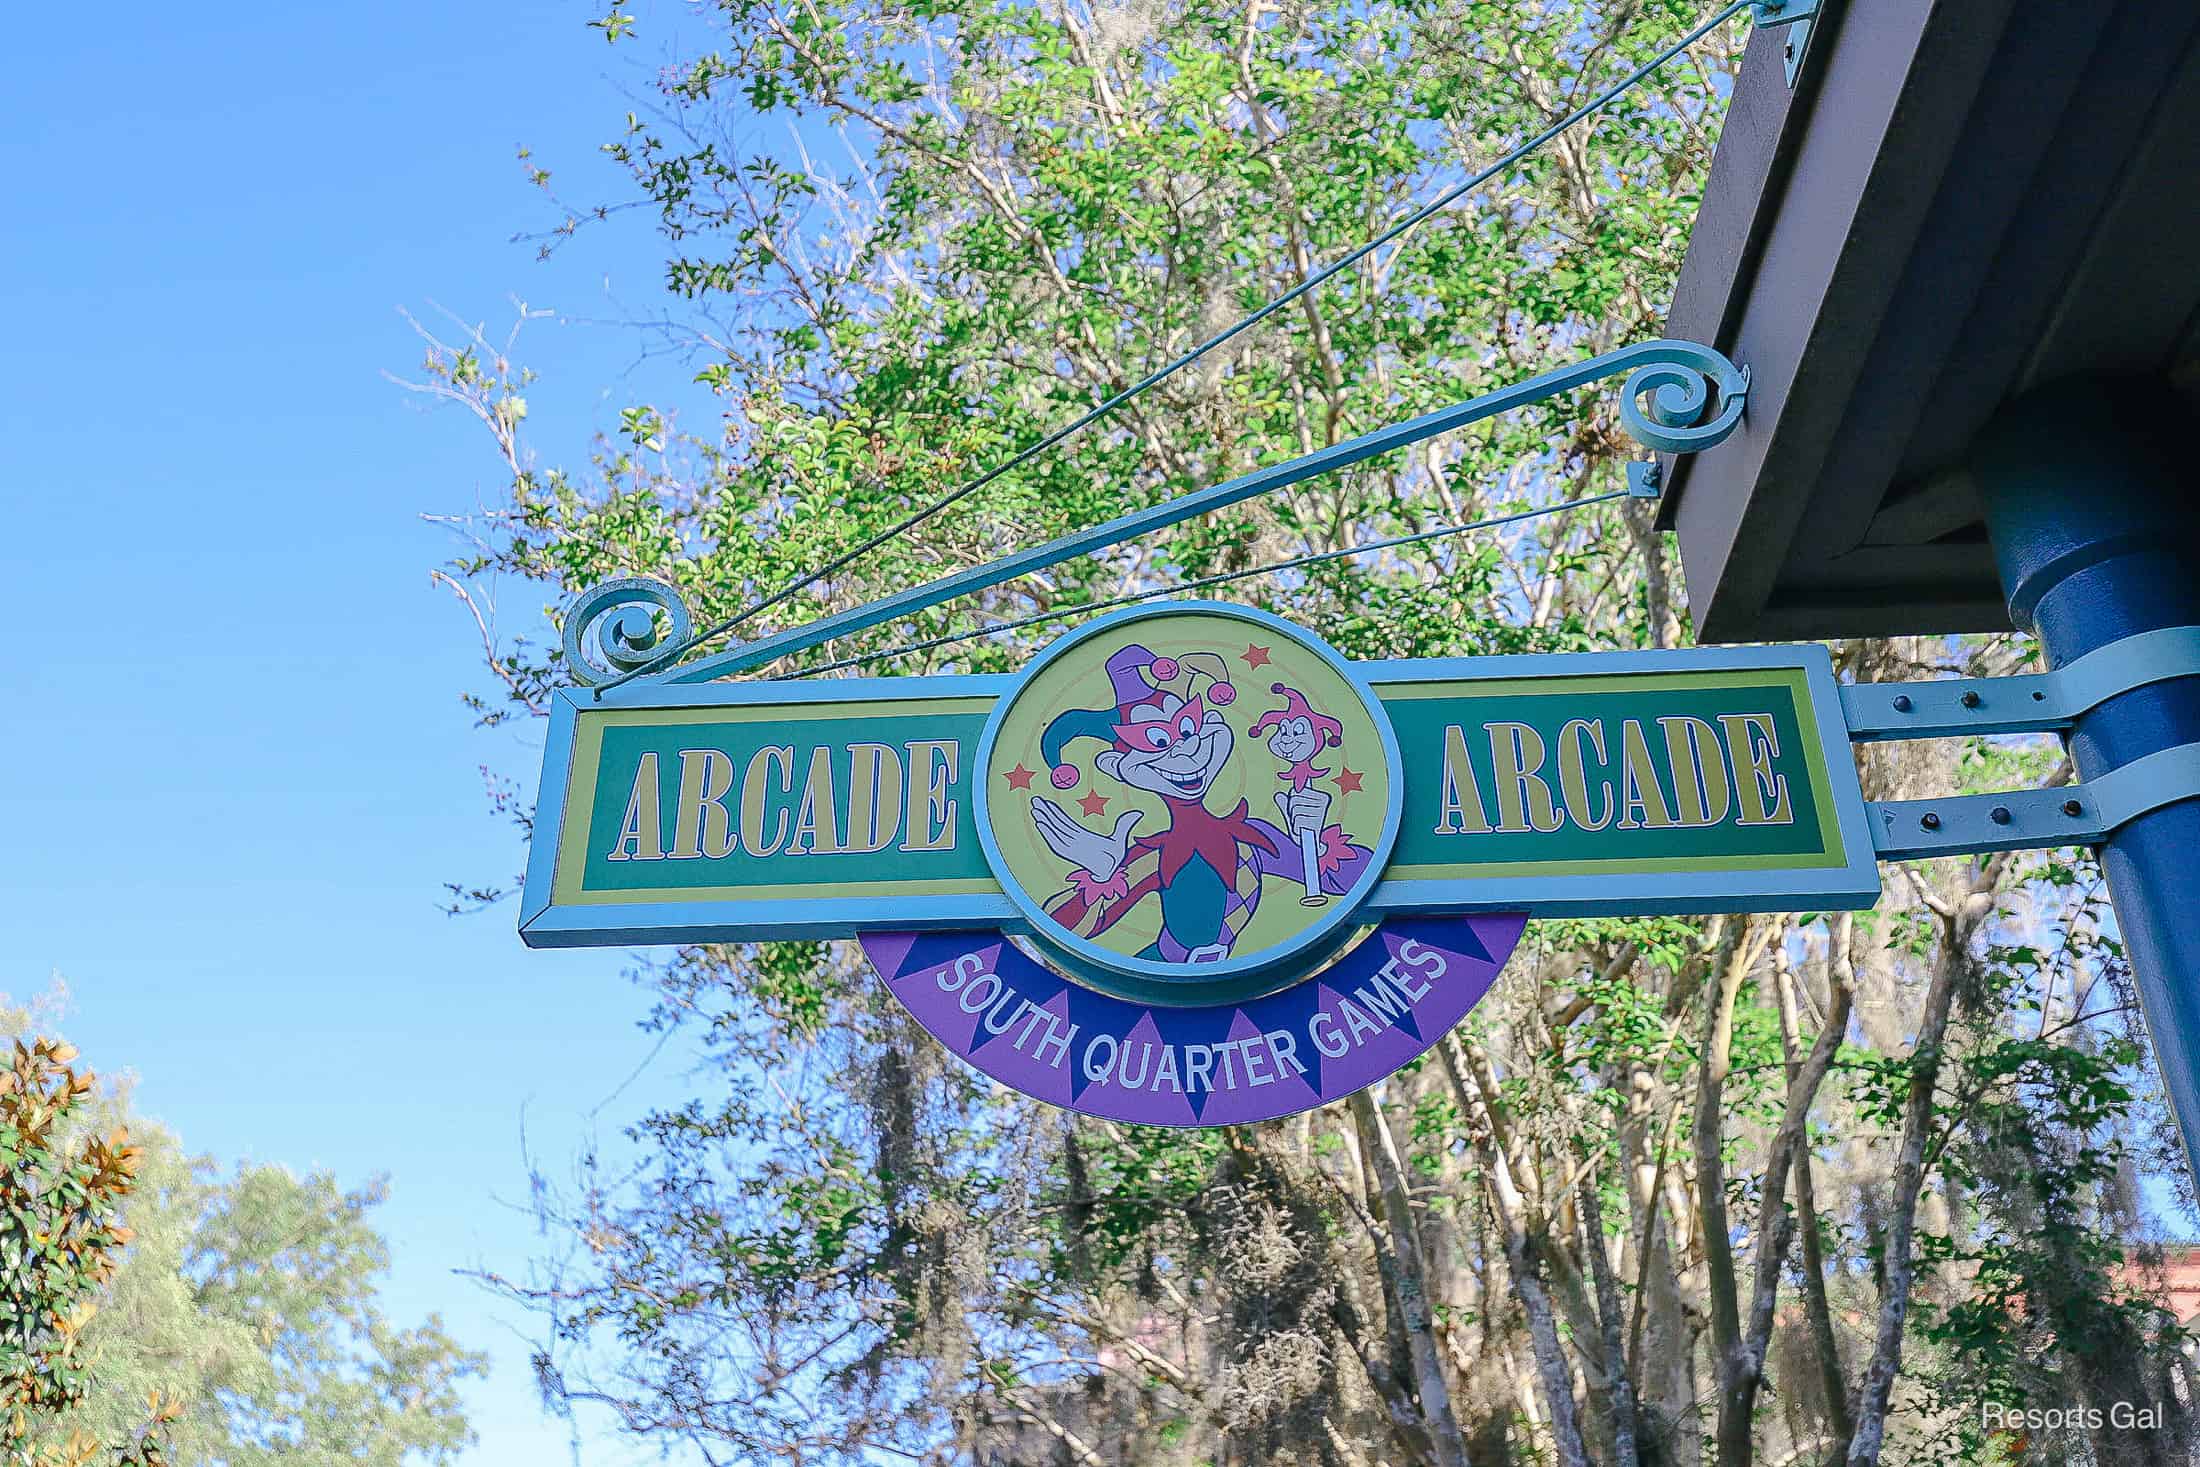 a sign that says "Arcade, Arcade South Quarter Games" 